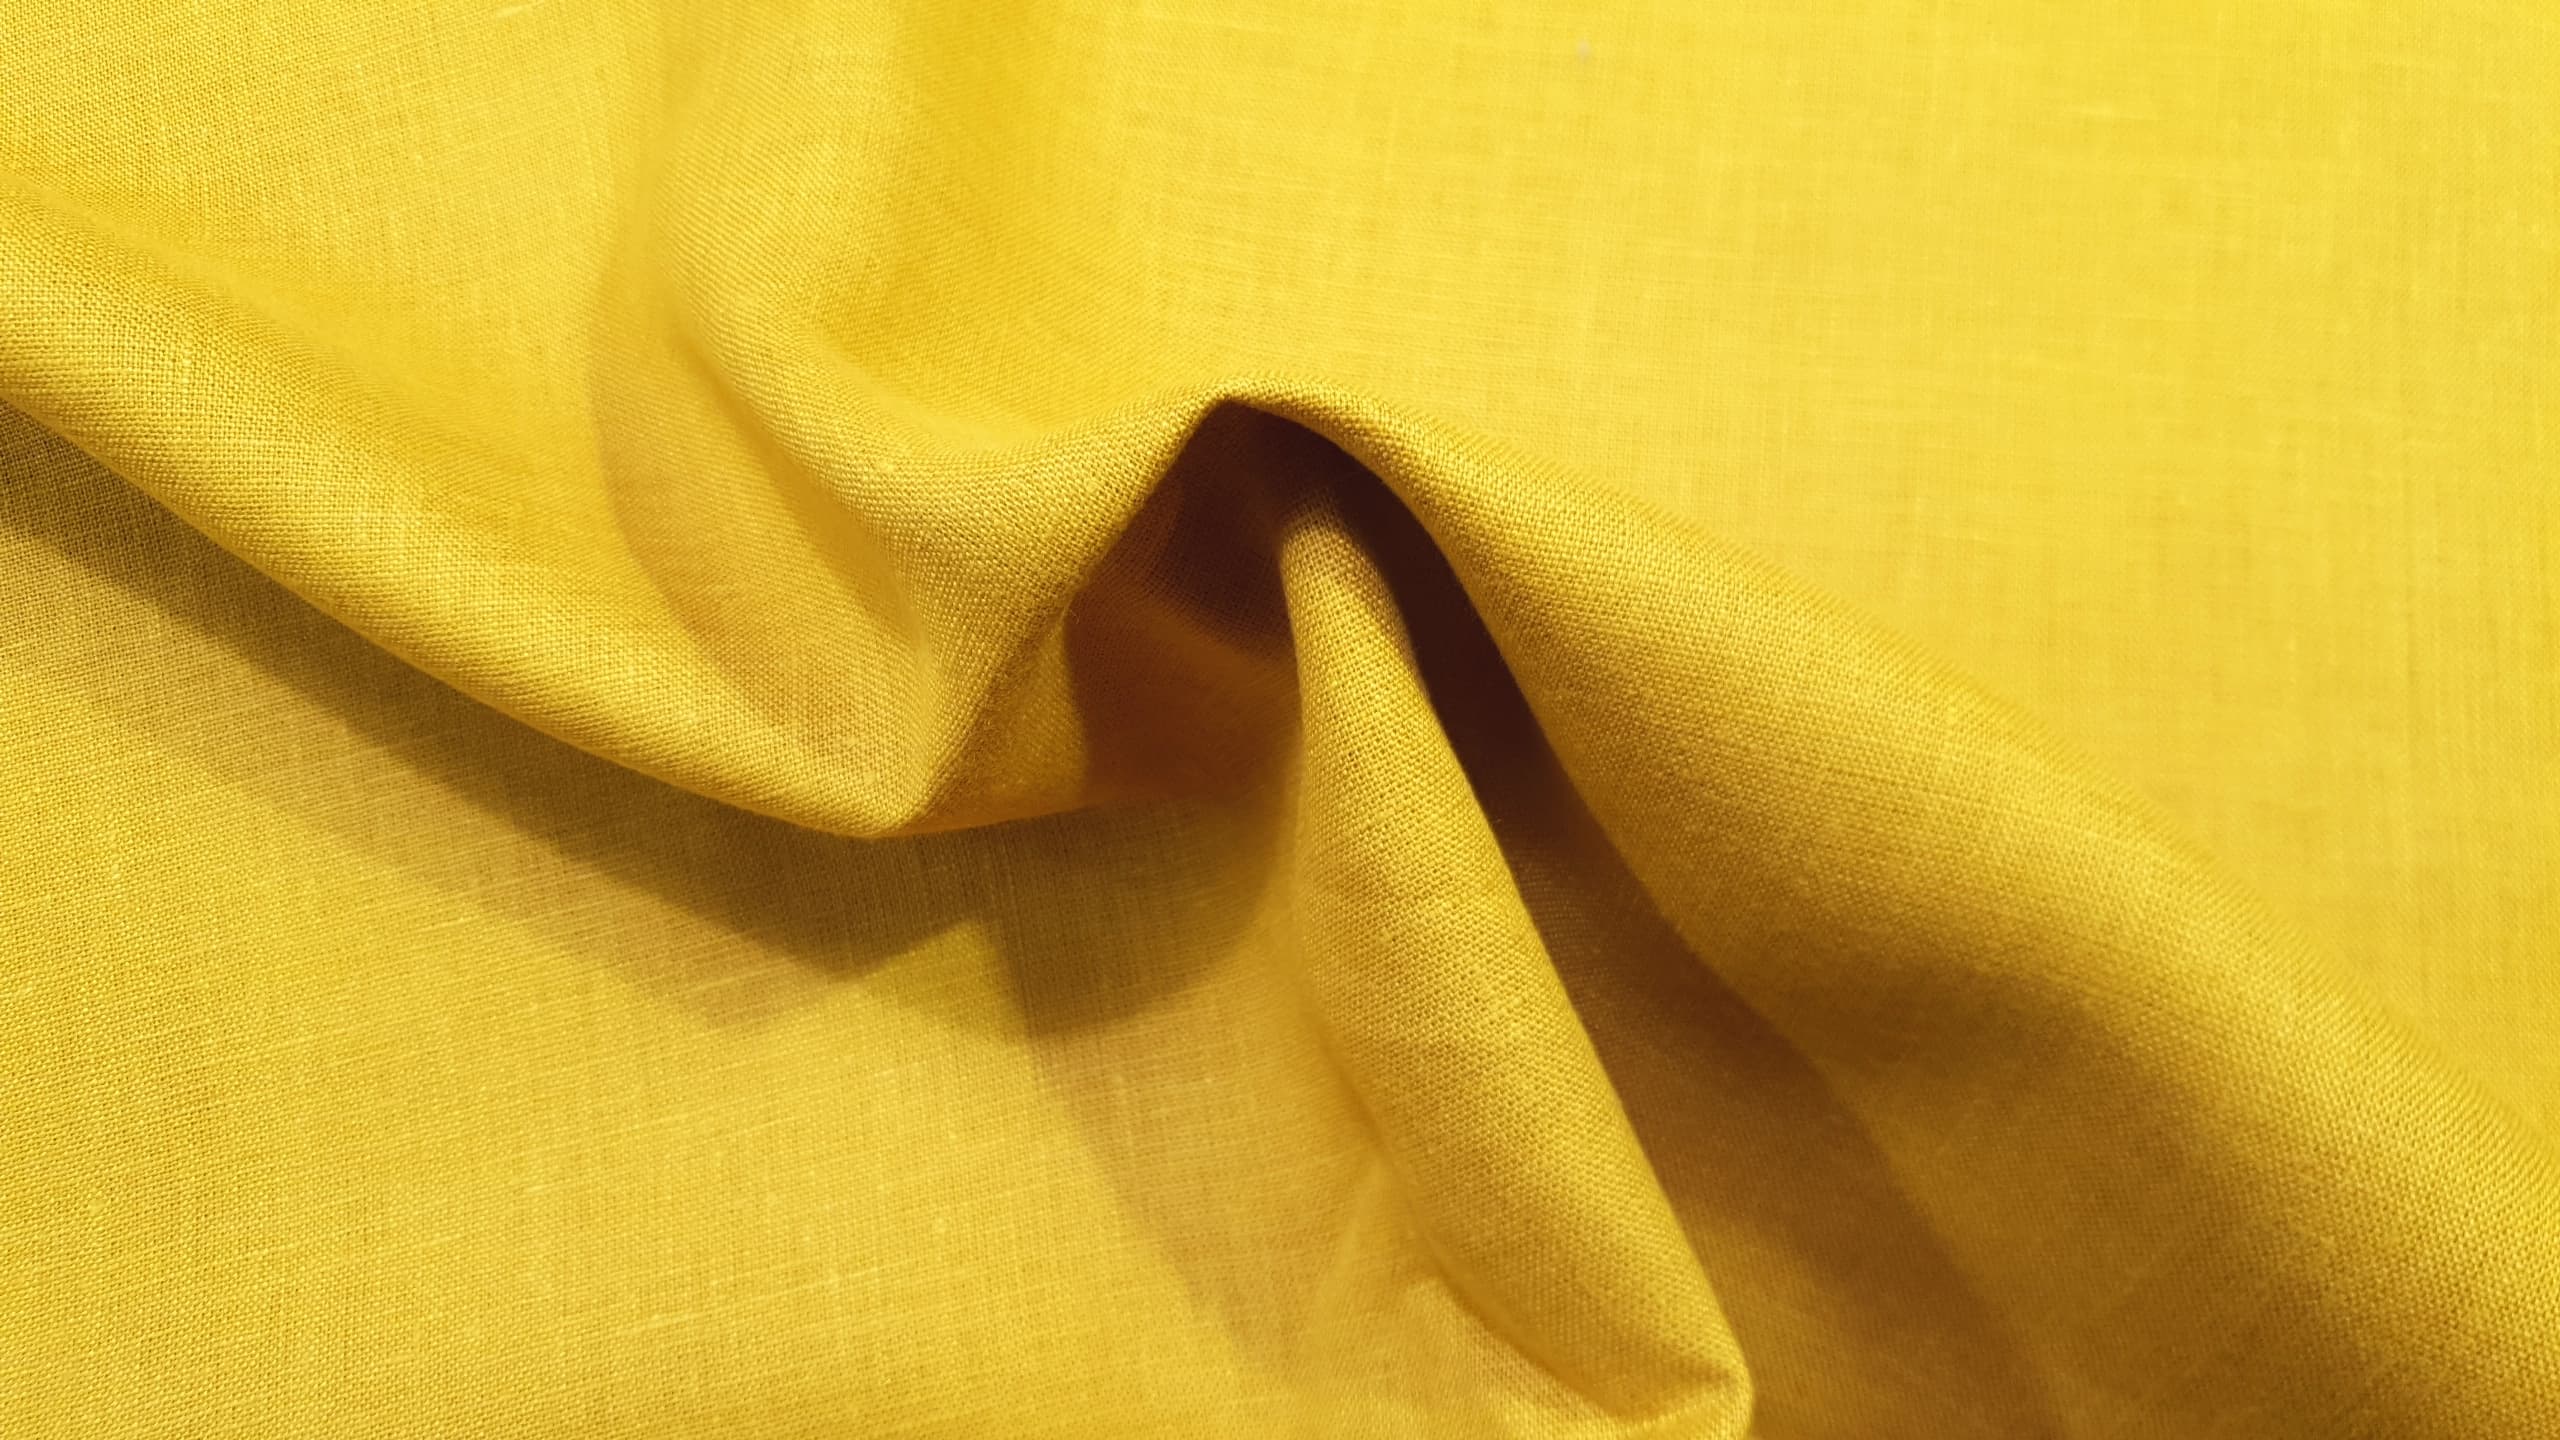 Medium prewashed linen 185g-sun yellow